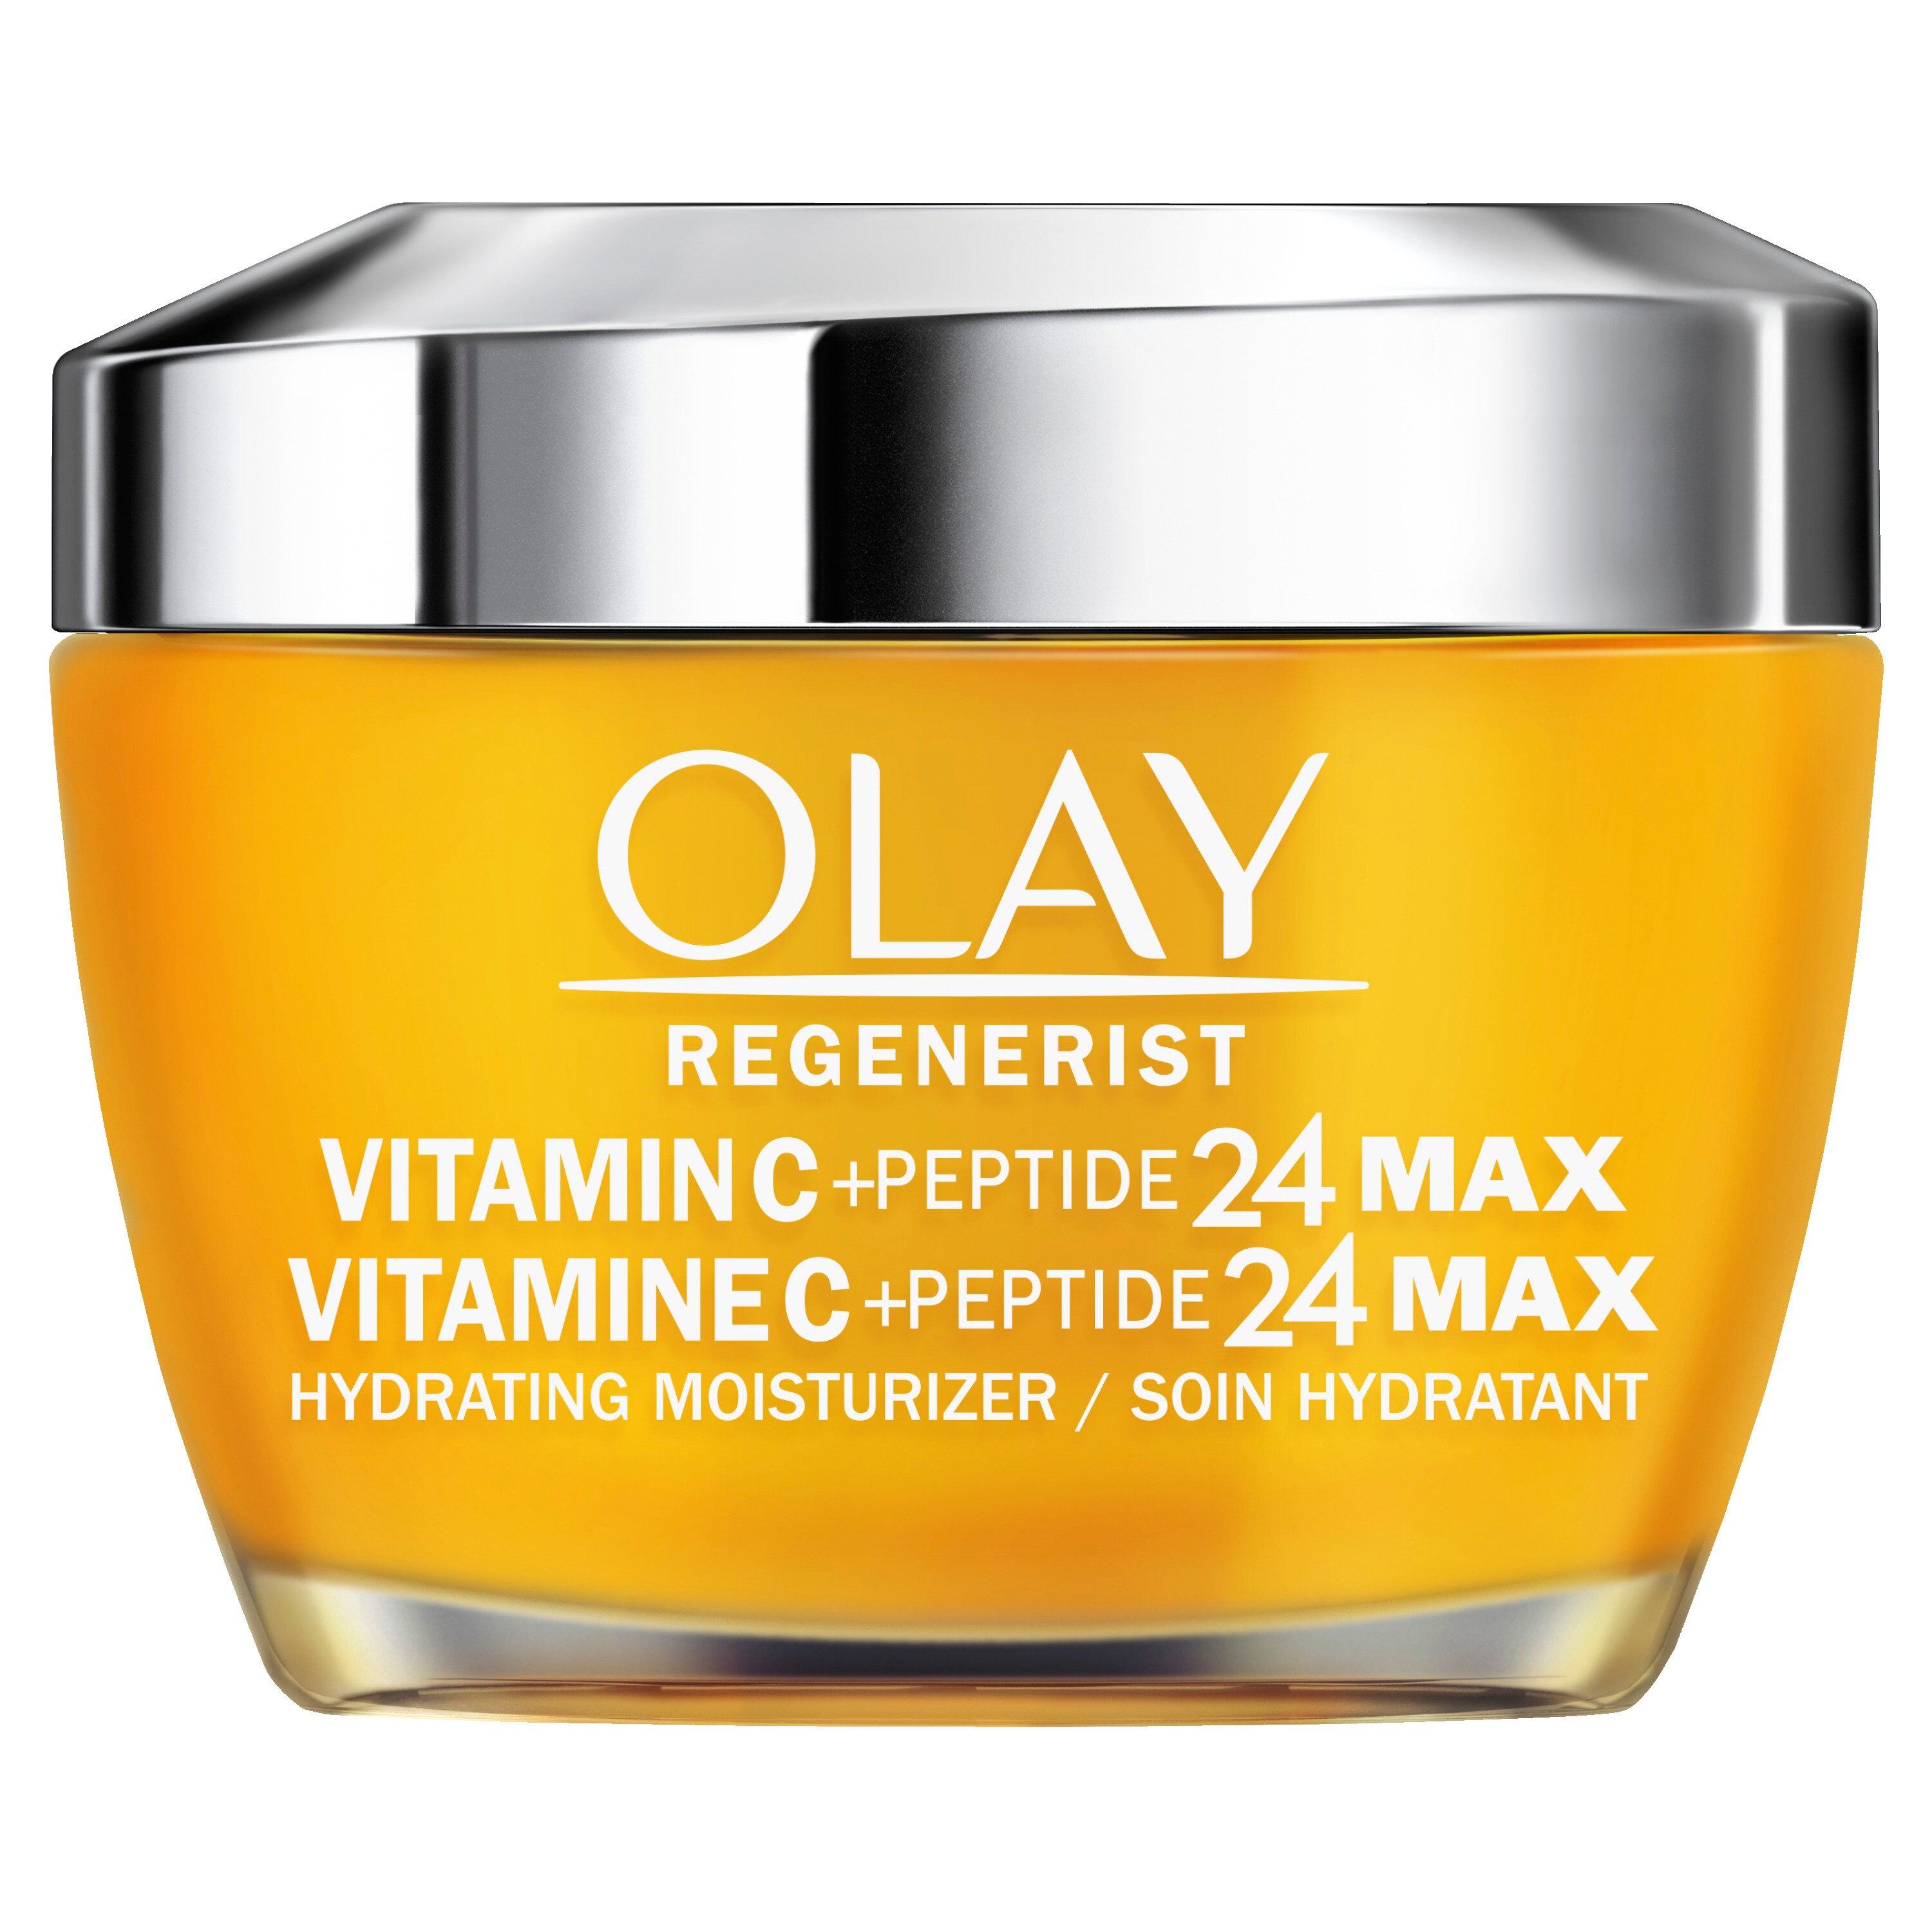 Olay Regenerist Vitamin C + Peptide 24 MAX Face Moisturizer